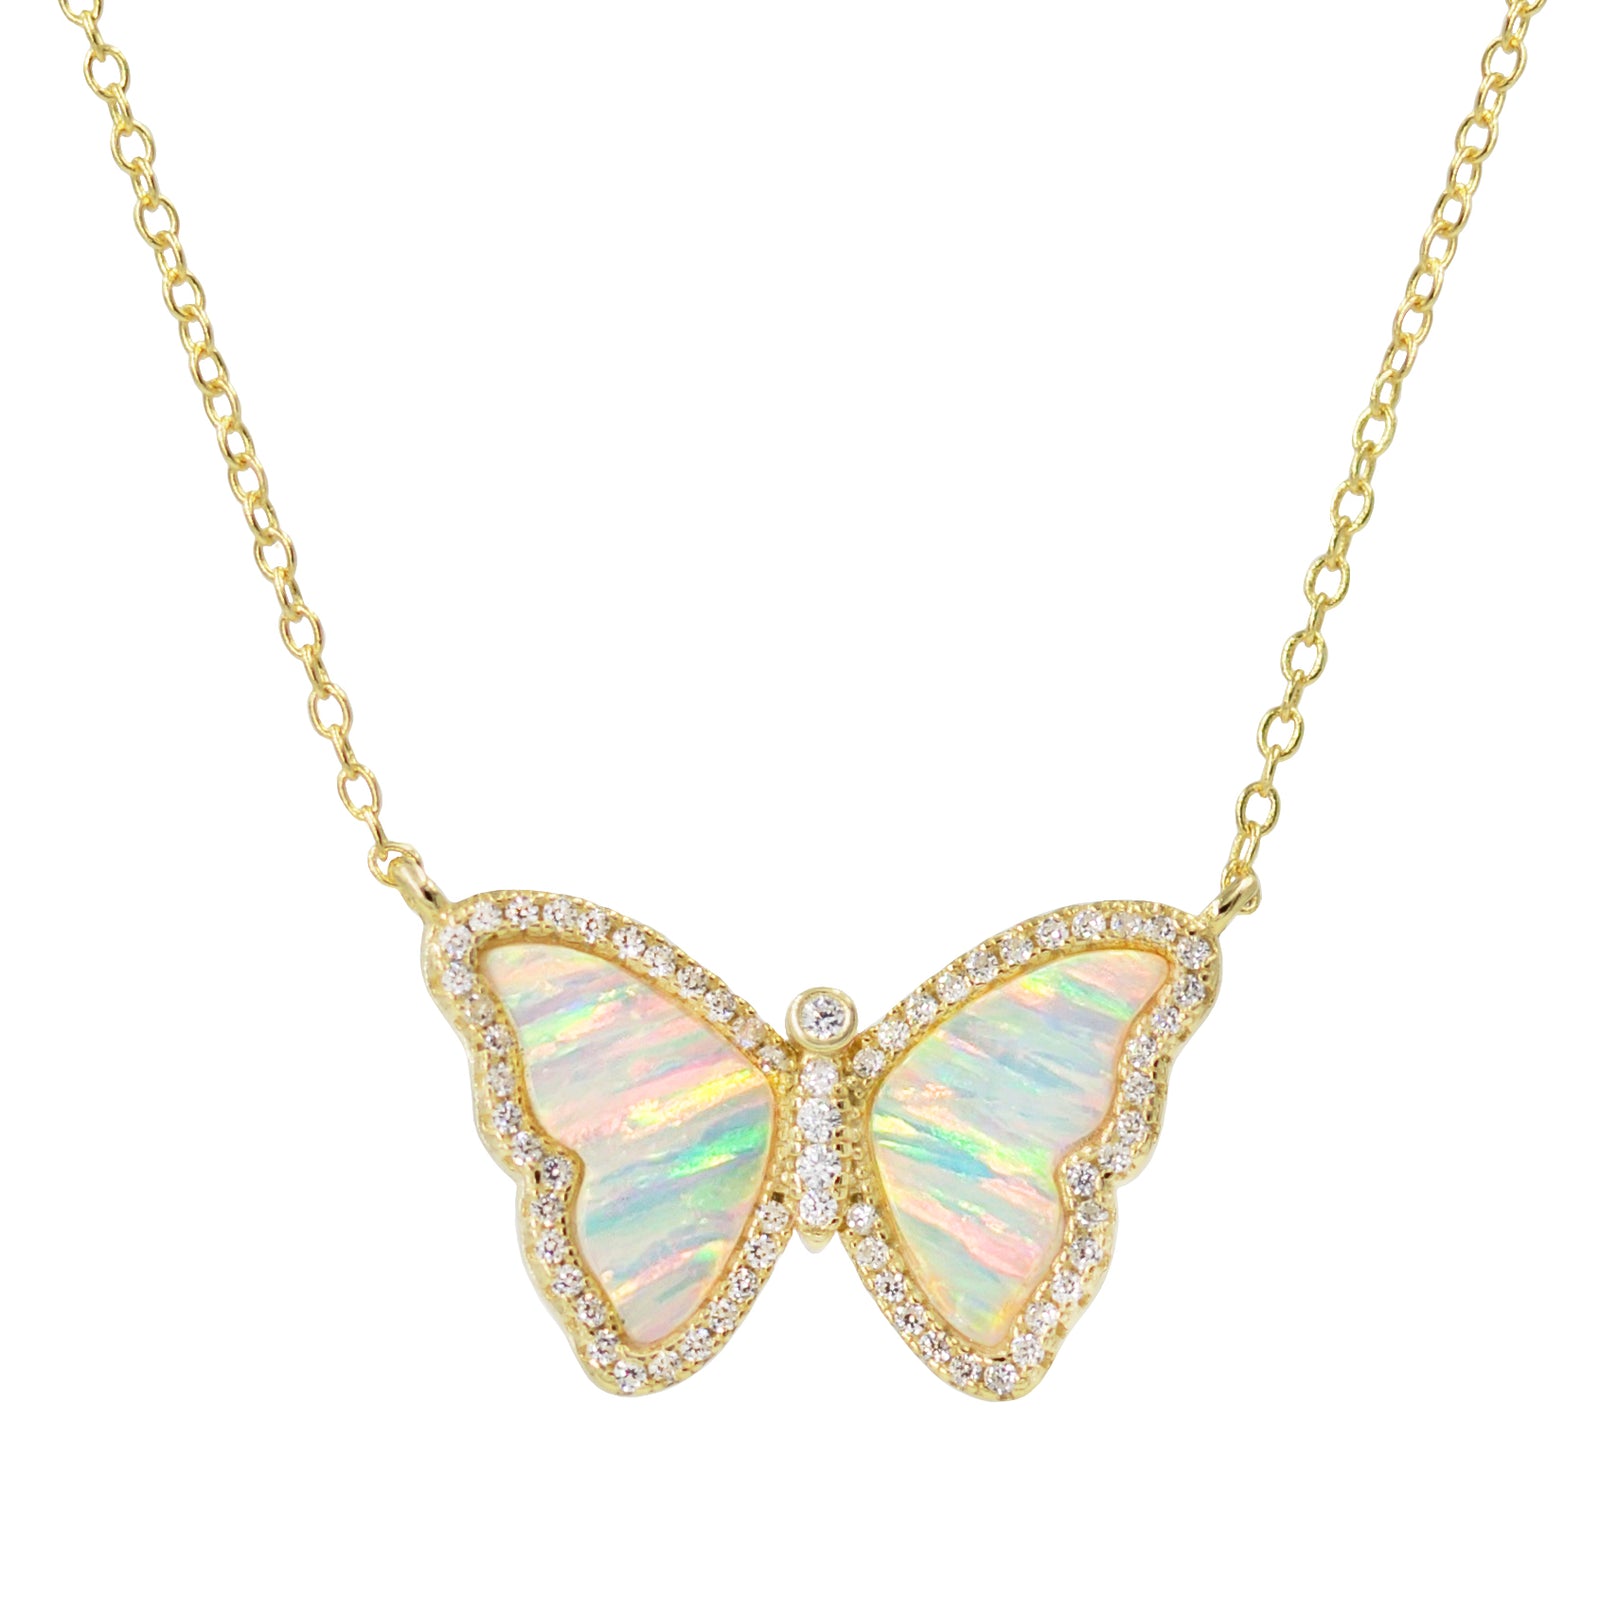 Wholesale Vintage cute trendy colorful butterfly pendant necklaces